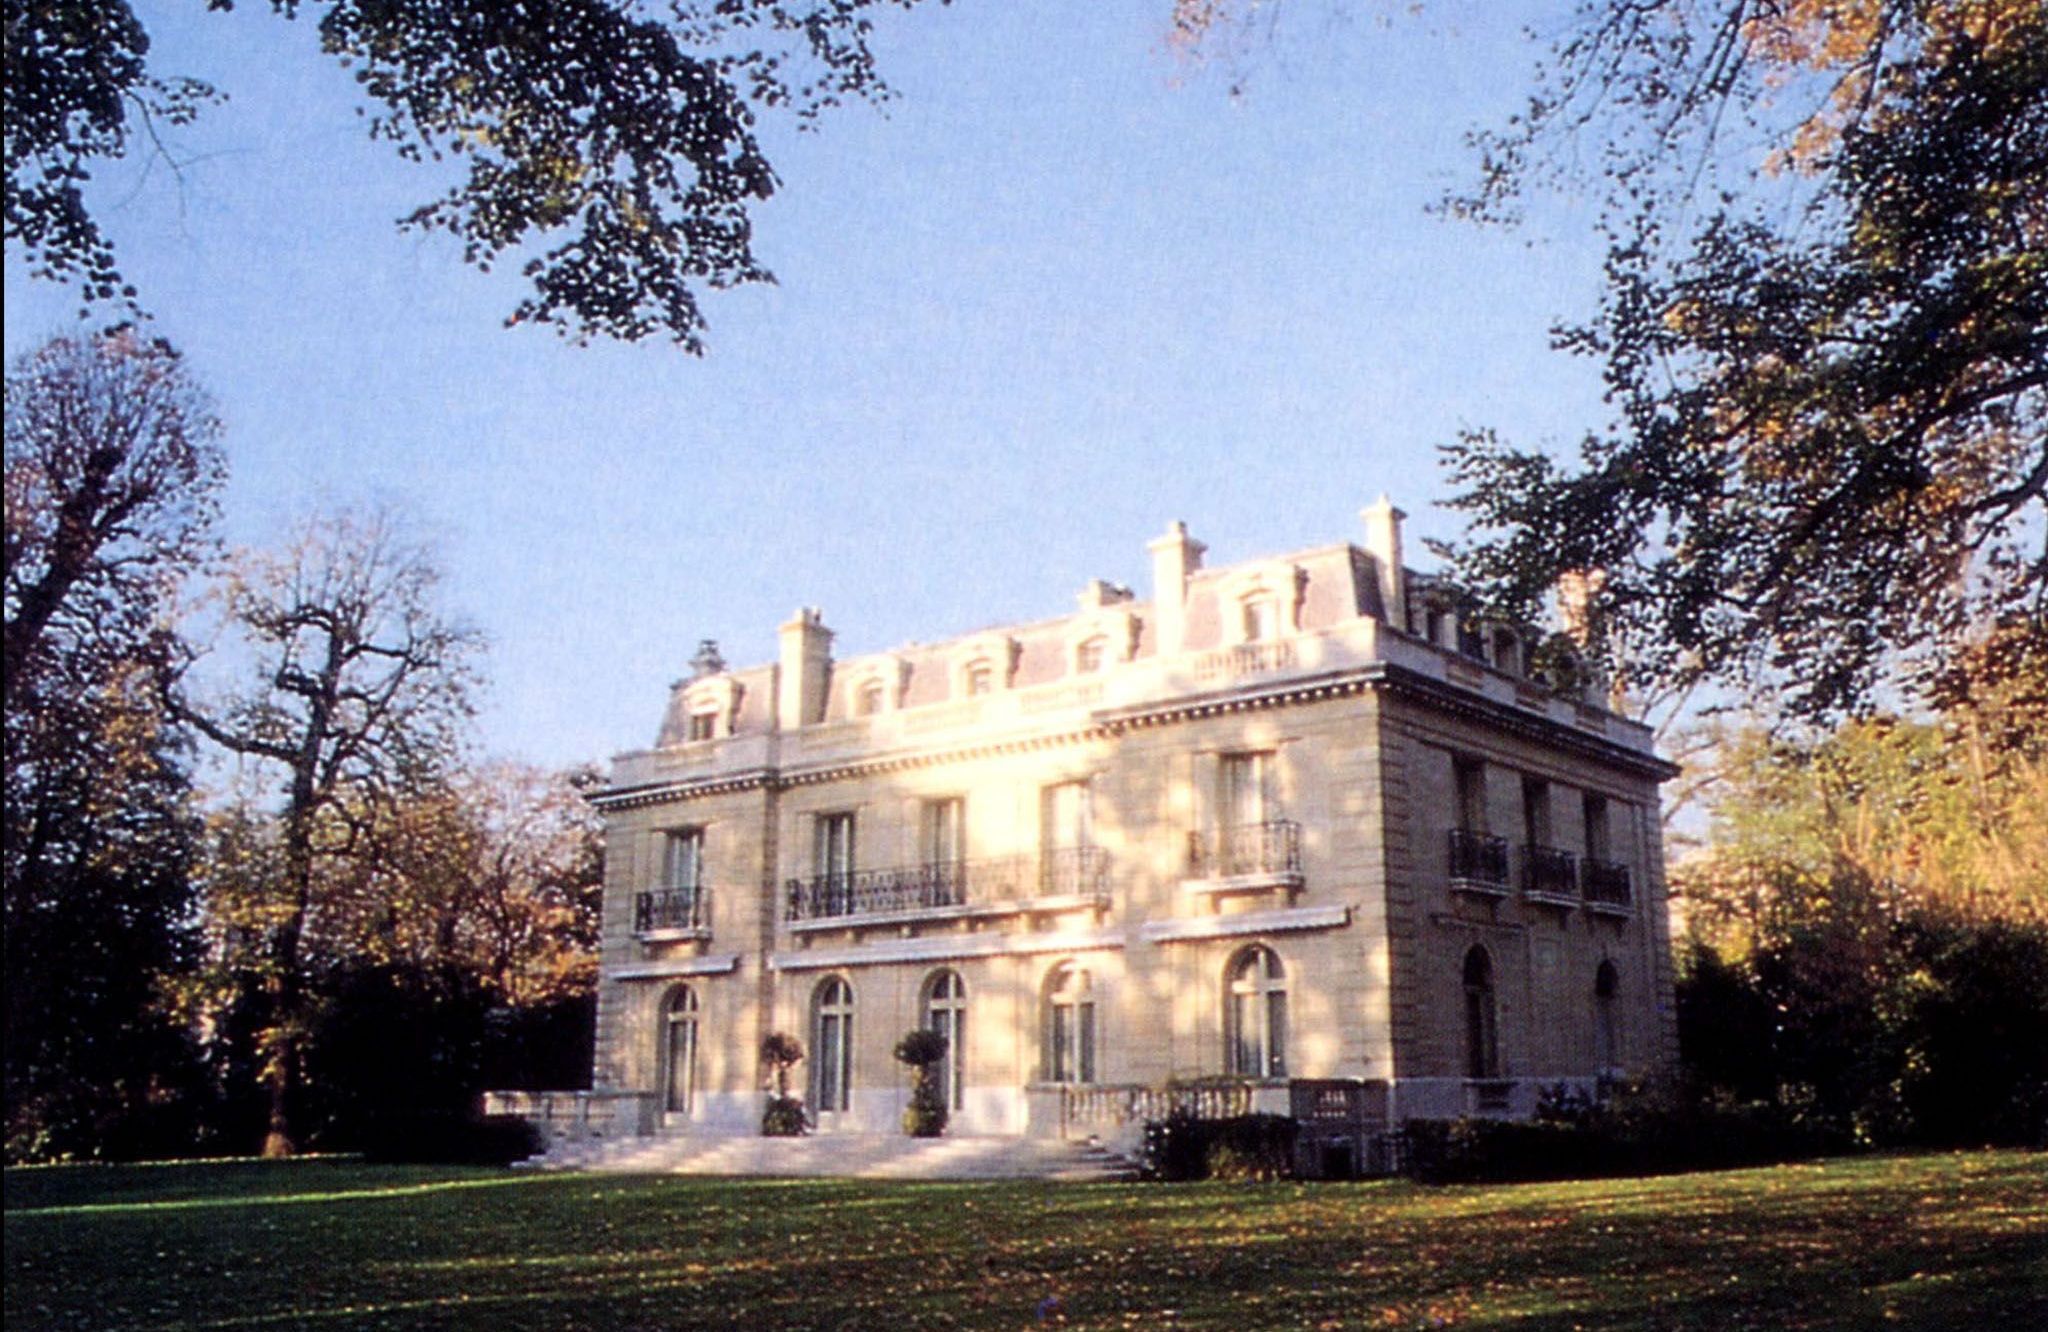 Villa Windsor in Paris: the residence of Edward VIII and Wallis Simpson is opening its doors soon